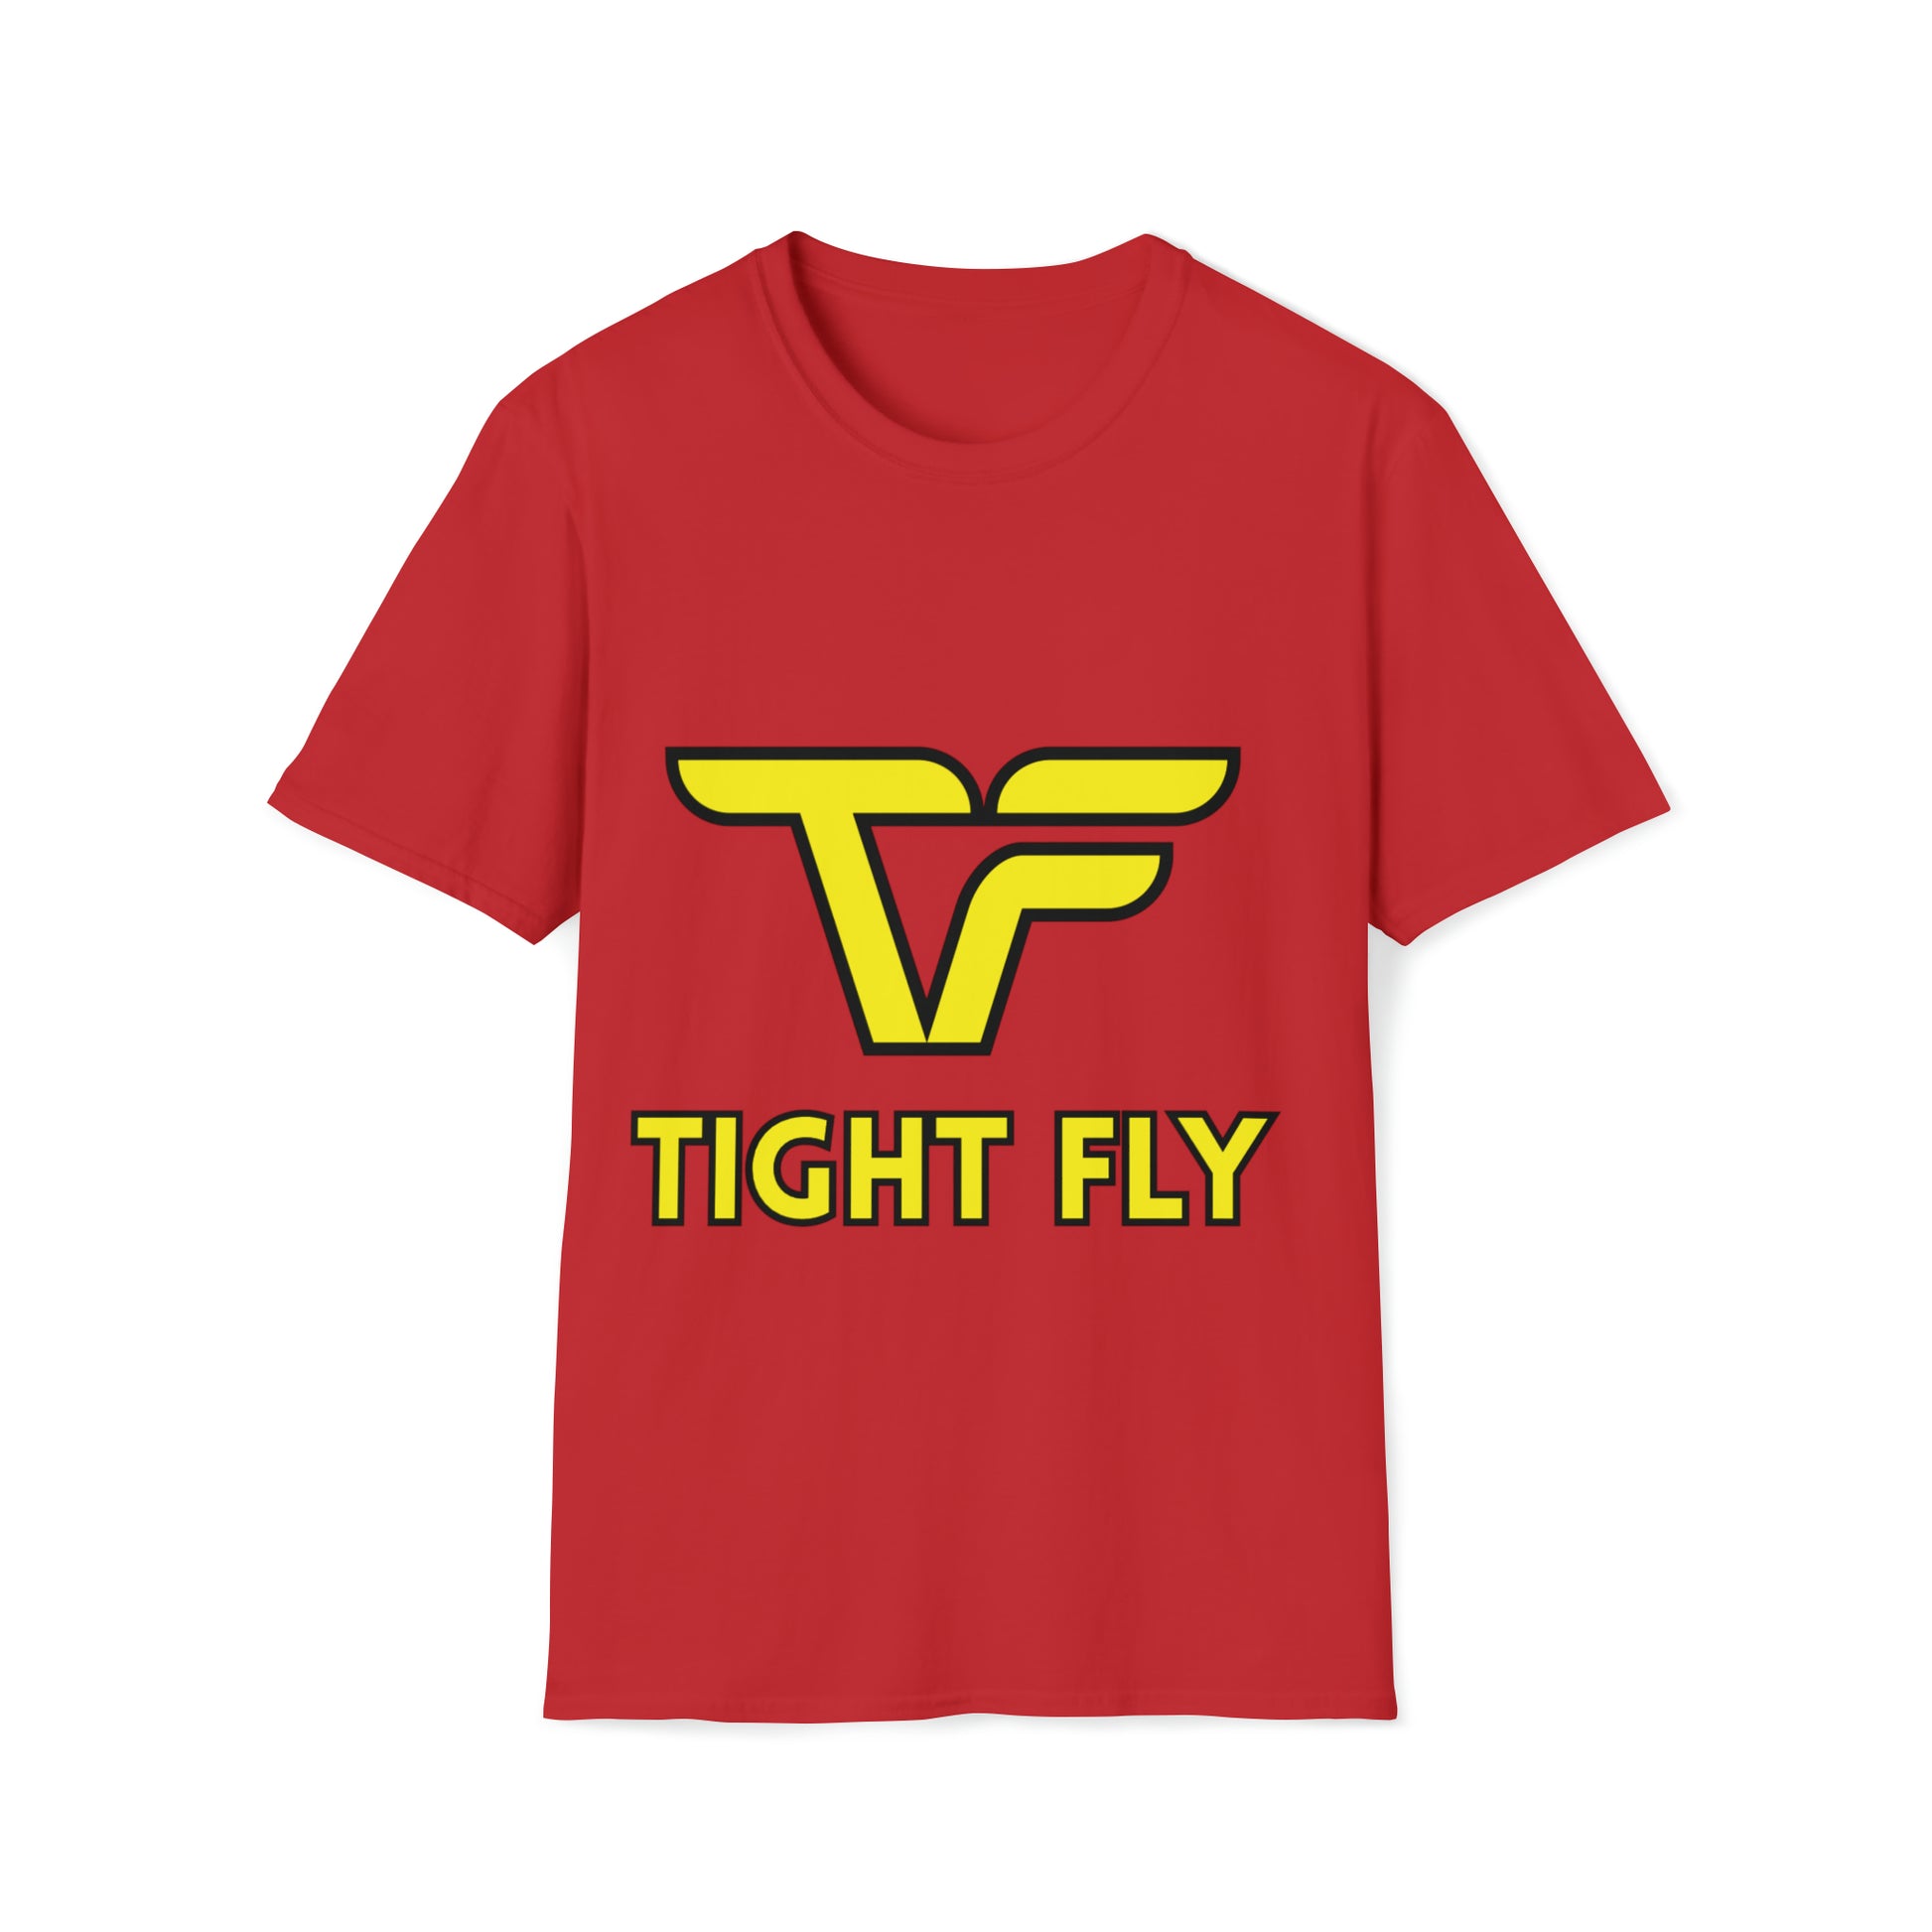 Tight Fly tshirt